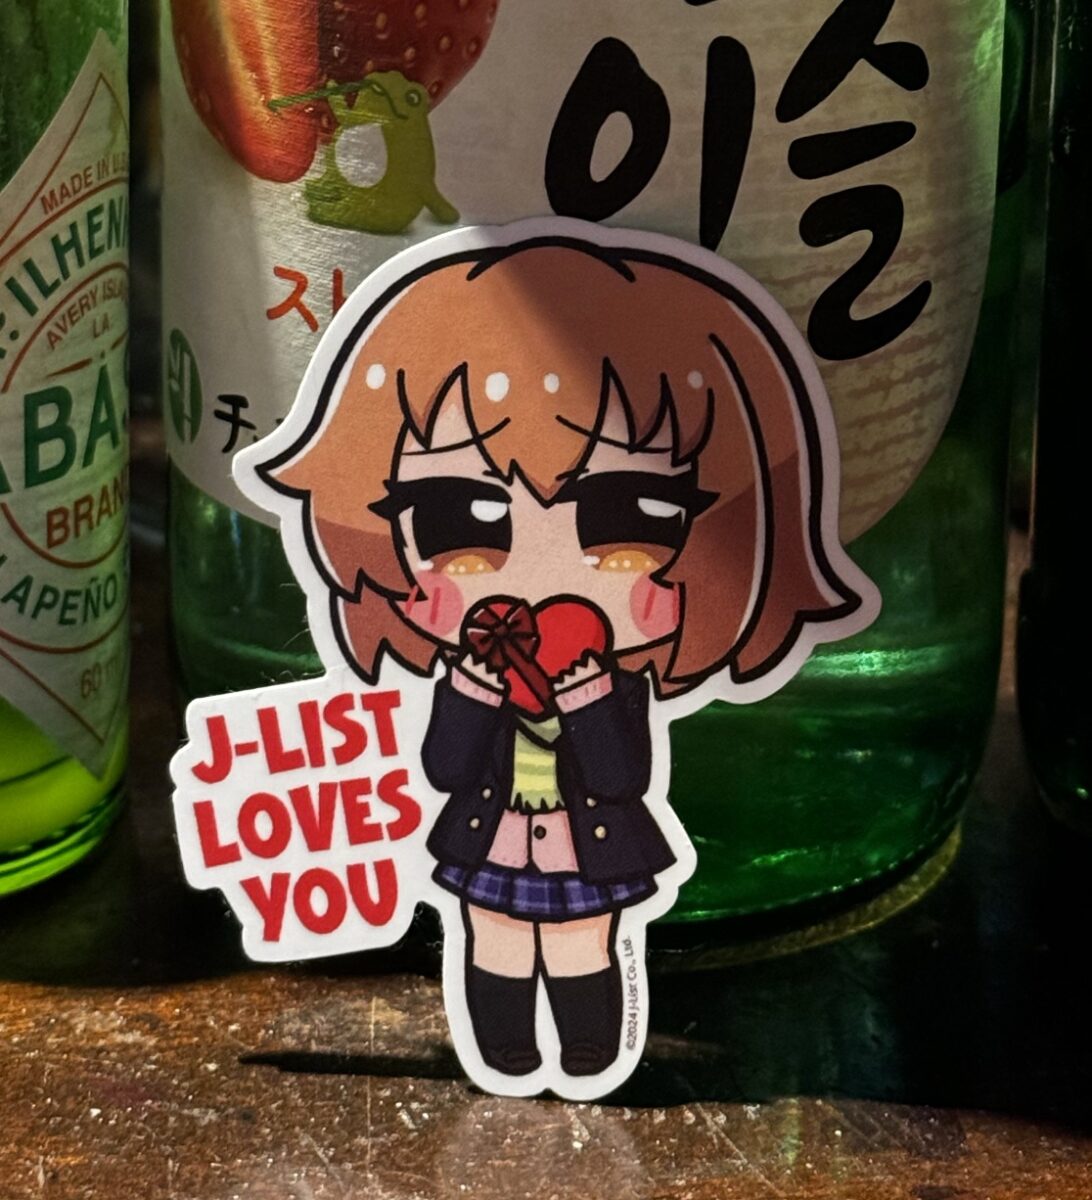 Megumi Sticker At A Bar